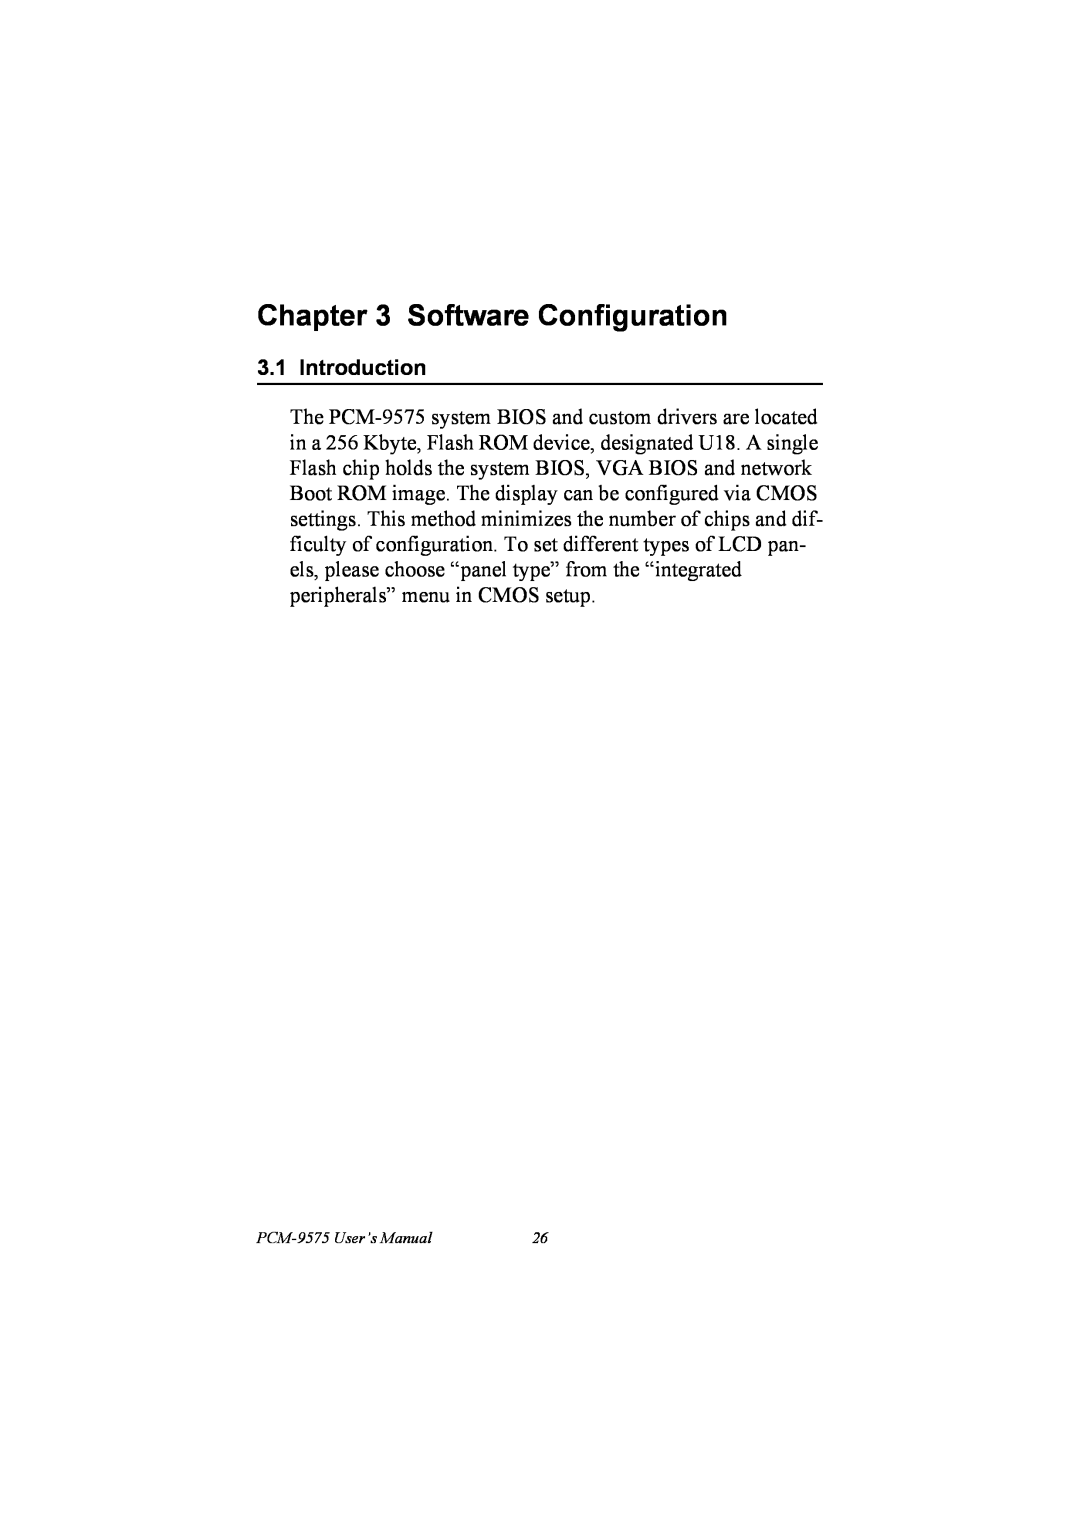 IBM PCM-9575, 100/10 user manual Software Configuration, Introduction 